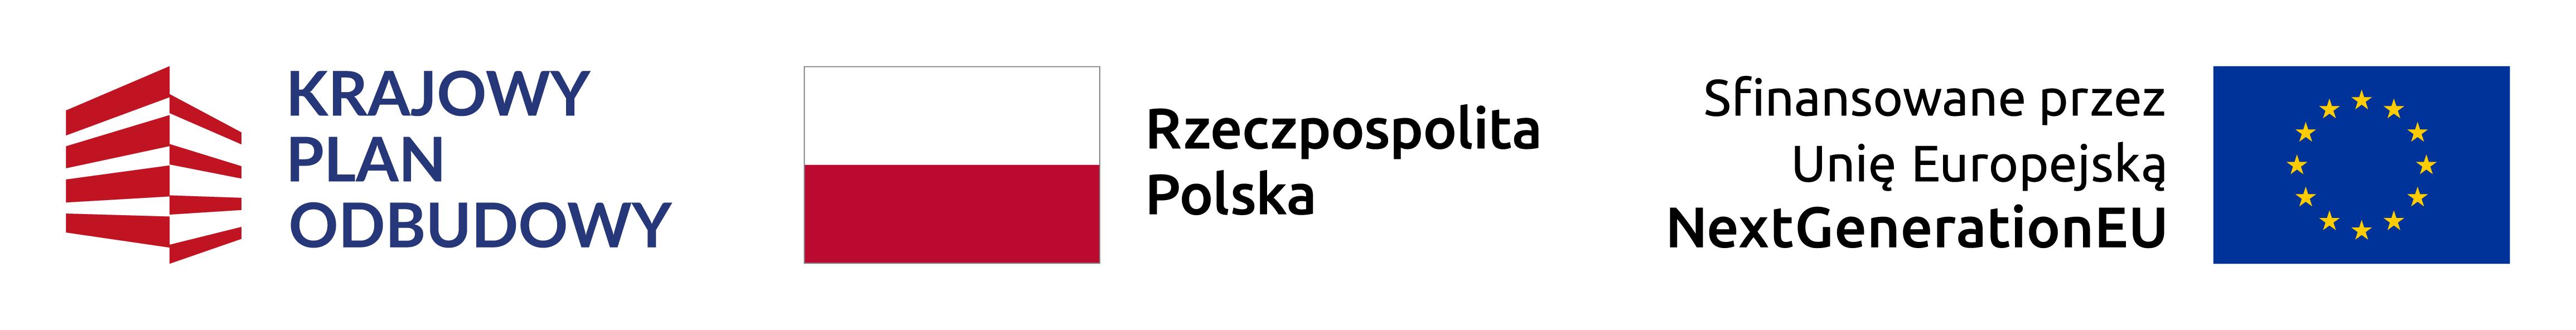 Logotypy dla programu KPO